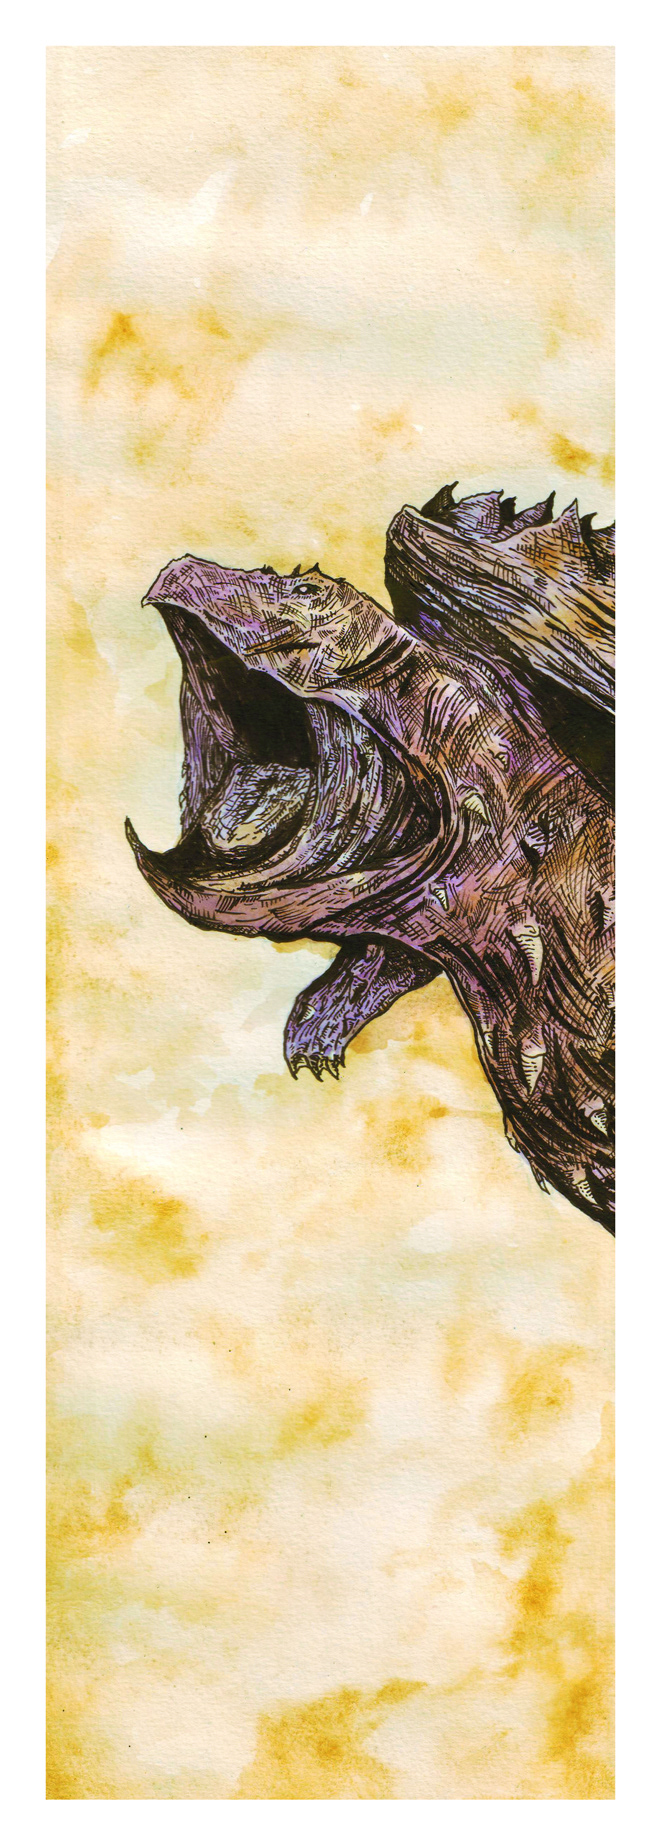 creature gojira kraken bedawang nala  ocean keeper monster pena hitam dark art hand drawing mythology